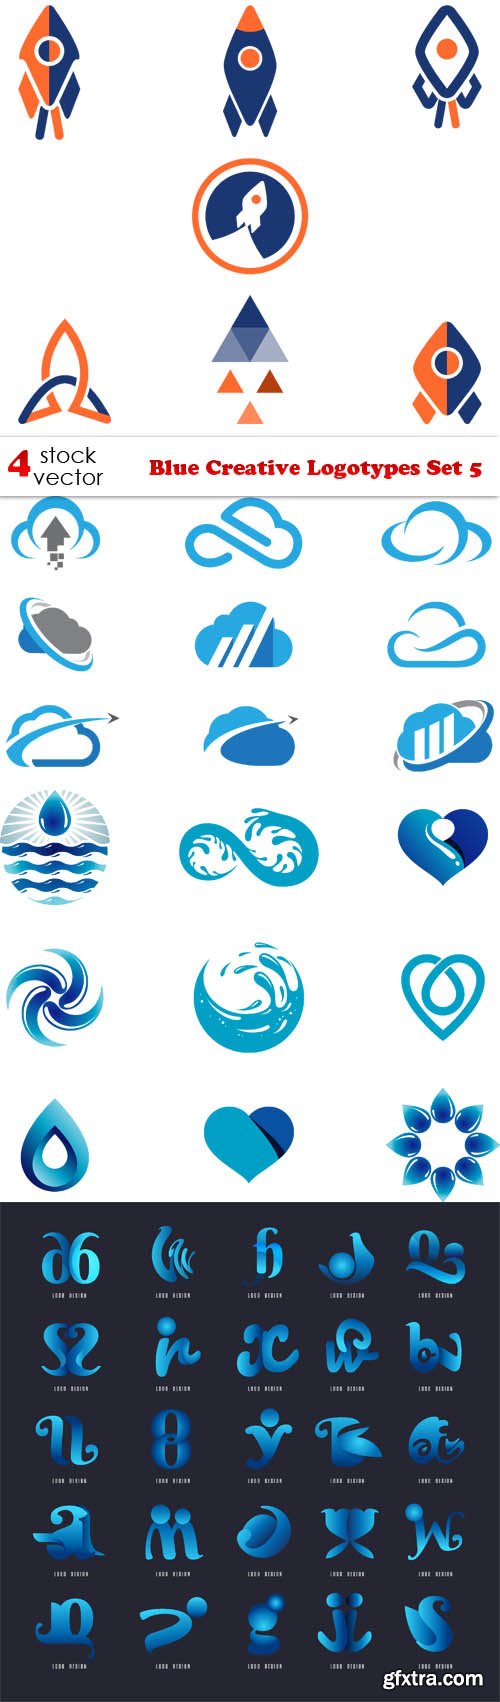 Vectors - Blue Creative Logotypes Set 5